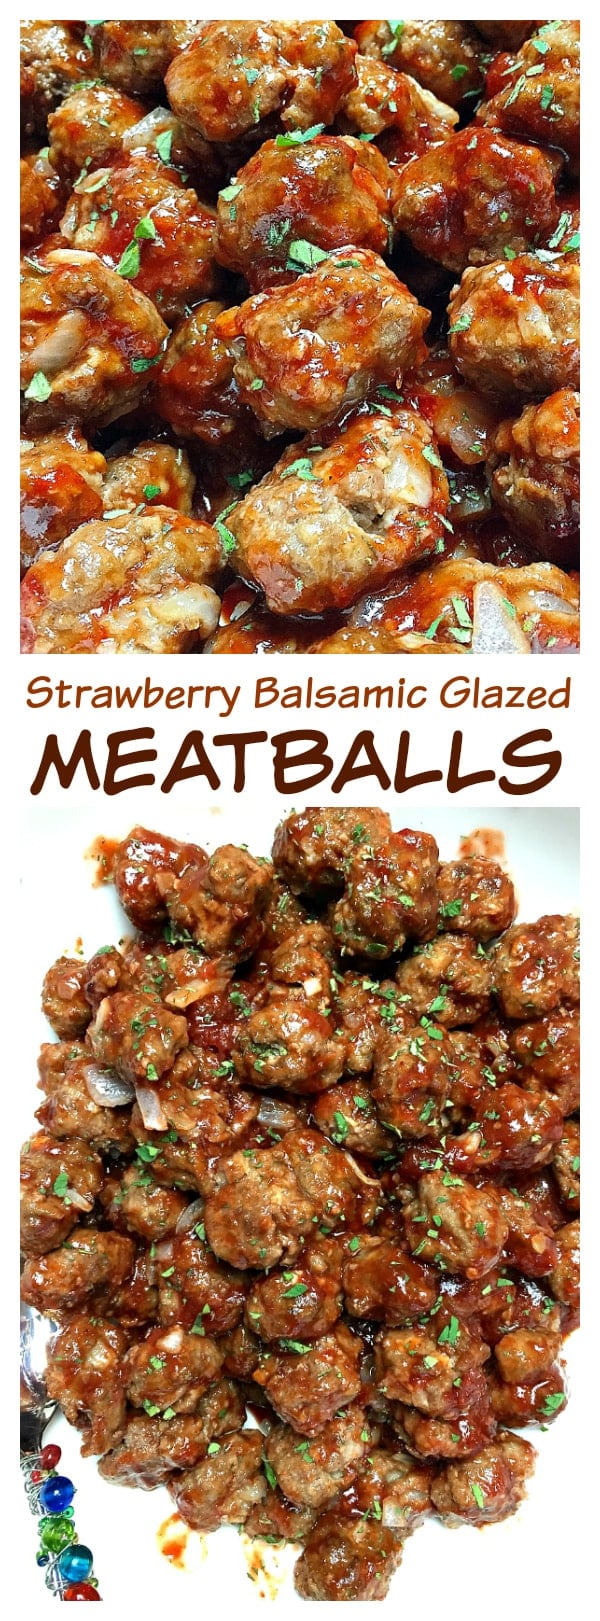 Strawberry Balsamic Glazed Meatballs